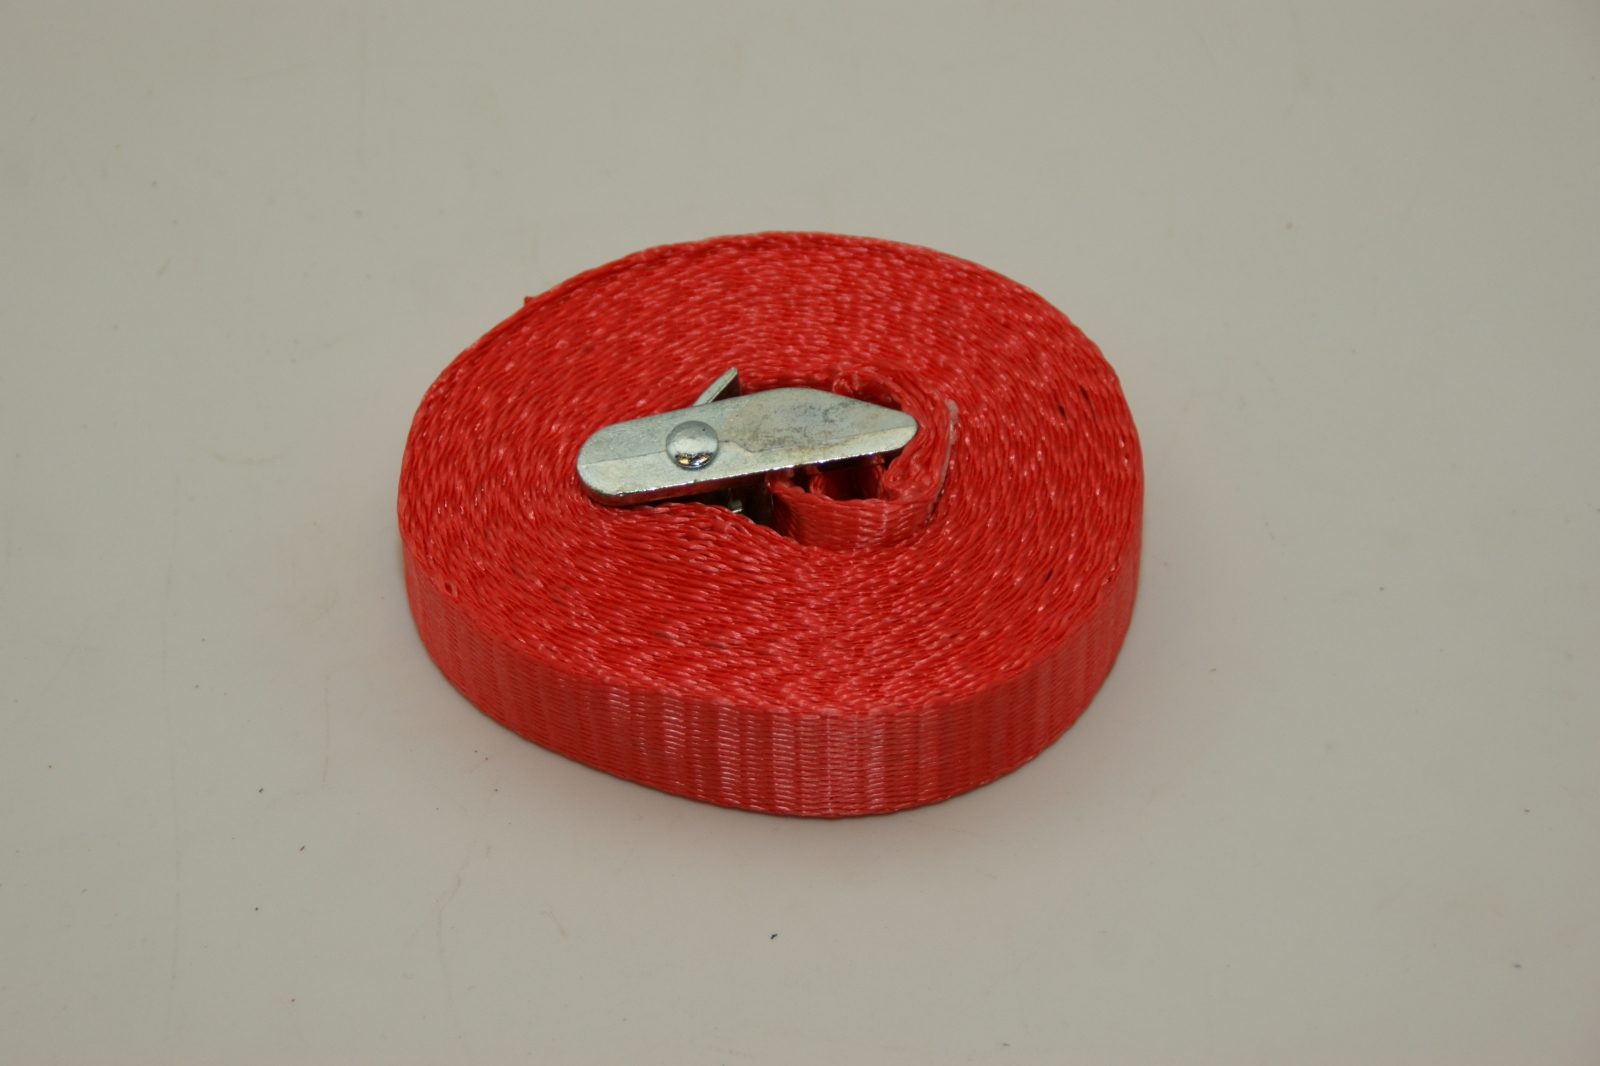 Sjorband: Bagagegordel rood, 25mm 6m, 500 daN